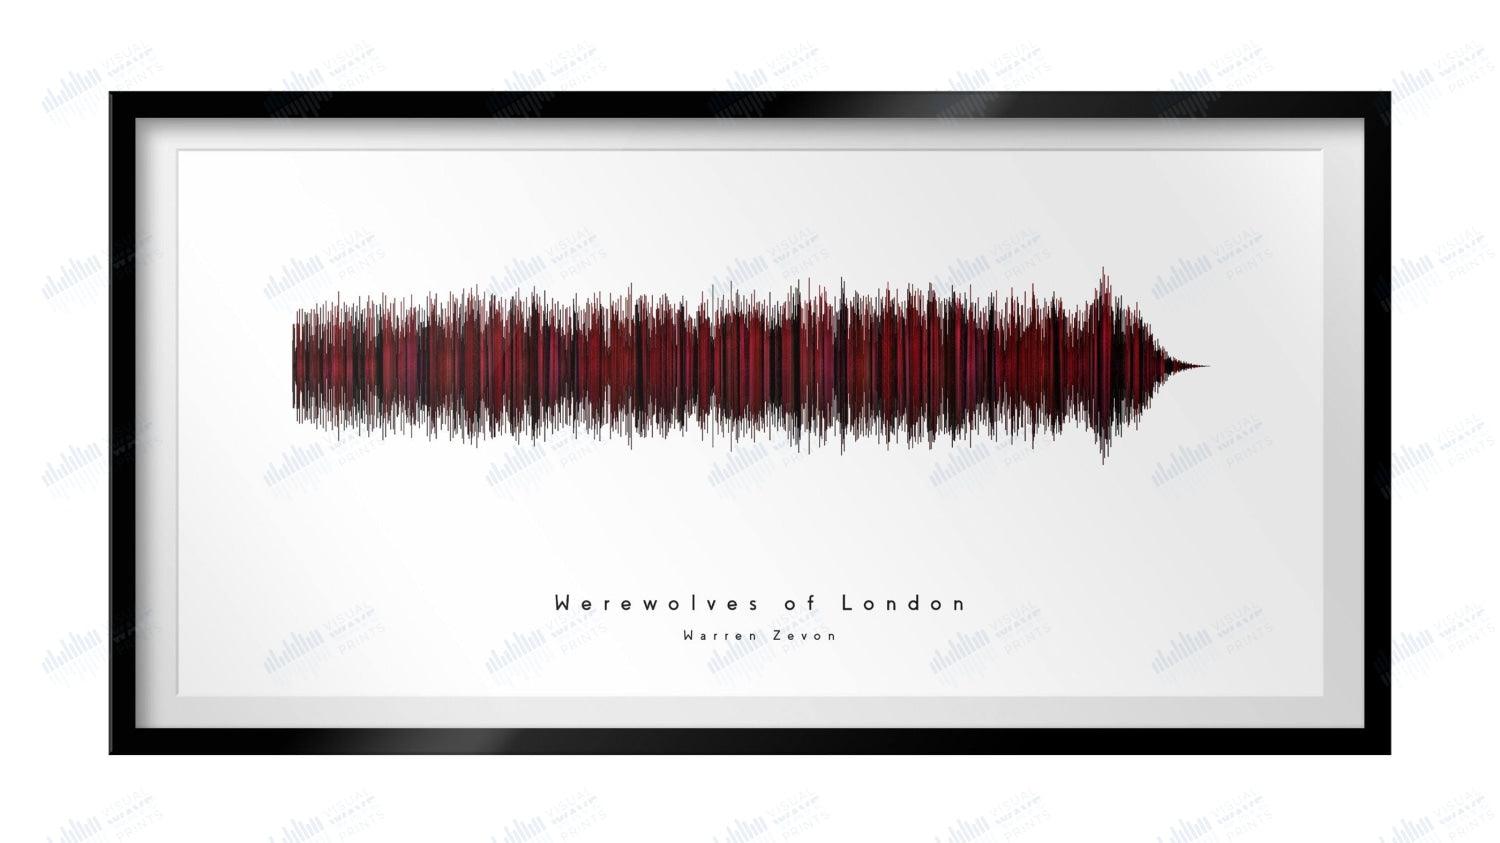 Werewolves of London by Warren Zevon - Visual Wave Prints